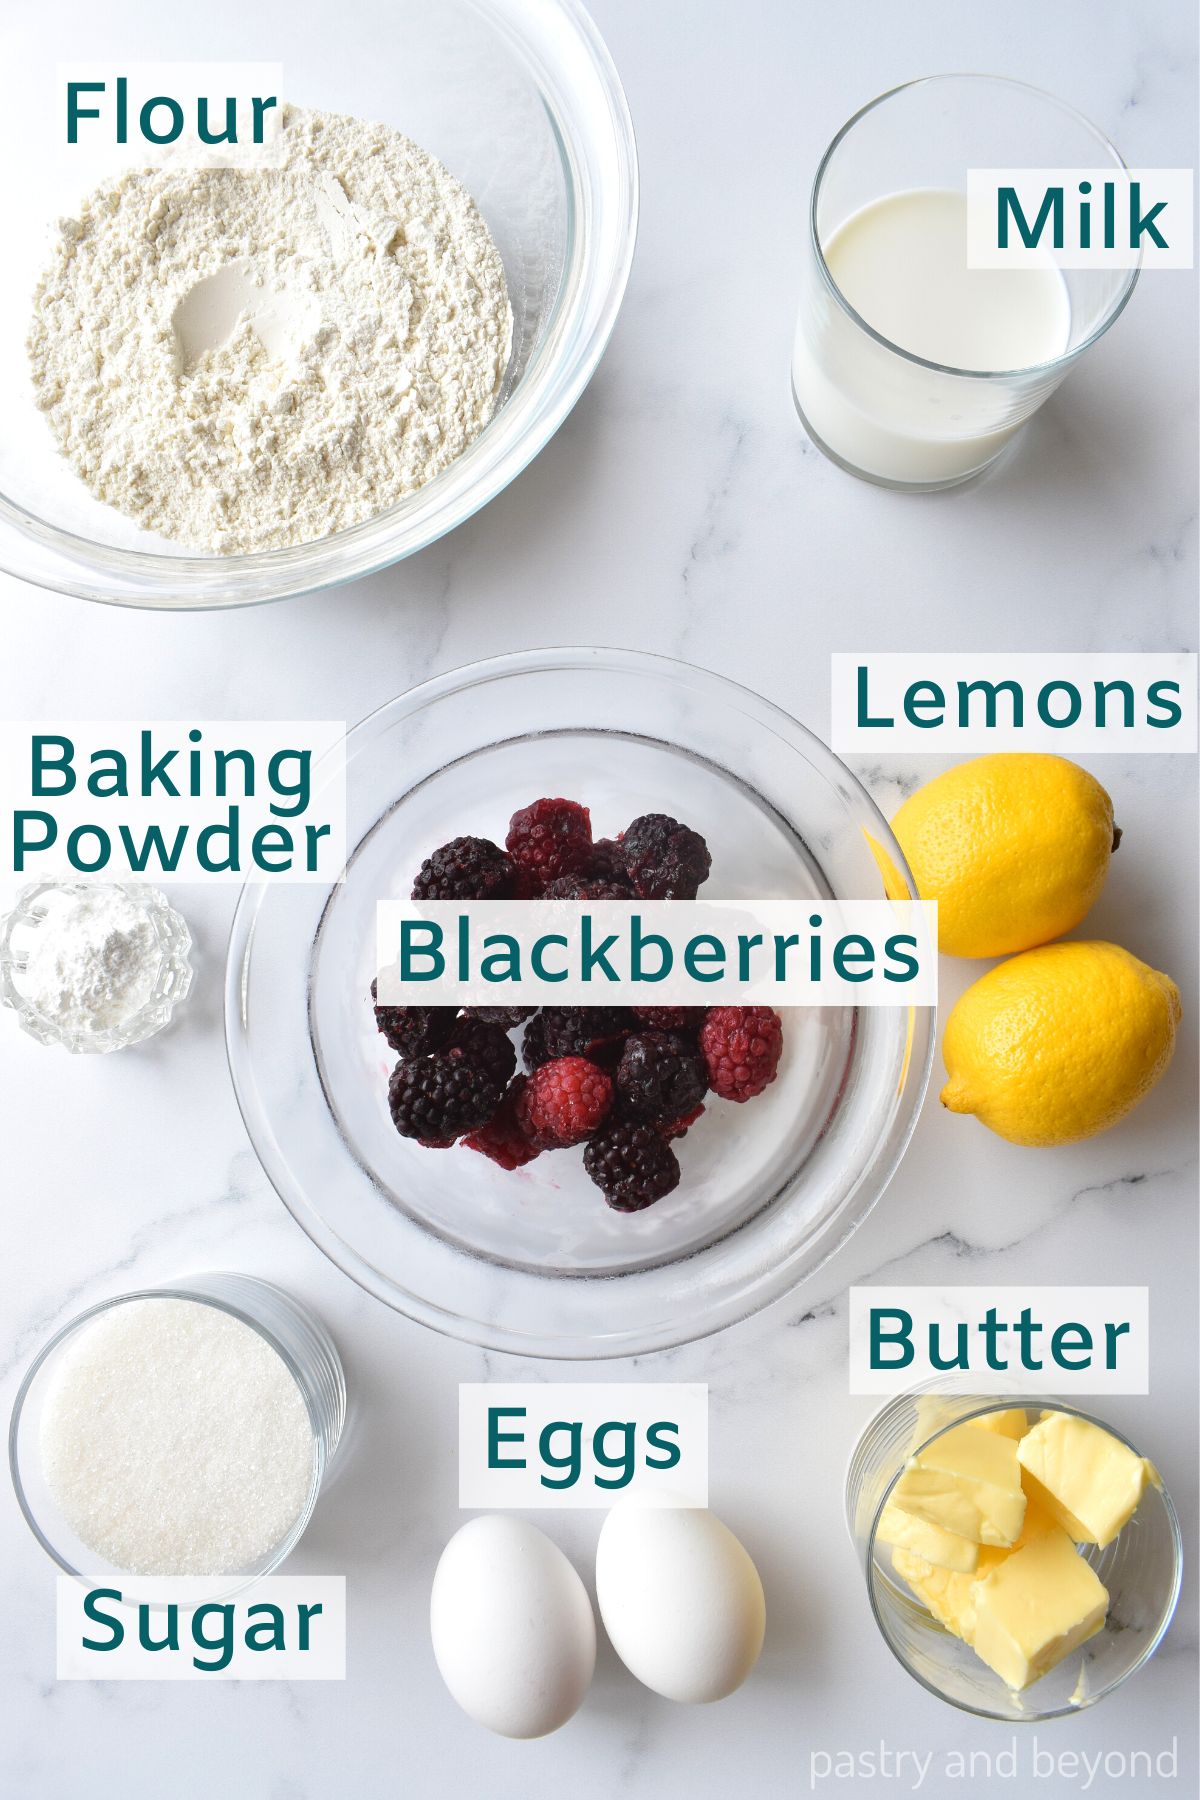 Ingredients for lemon blackberry bread.